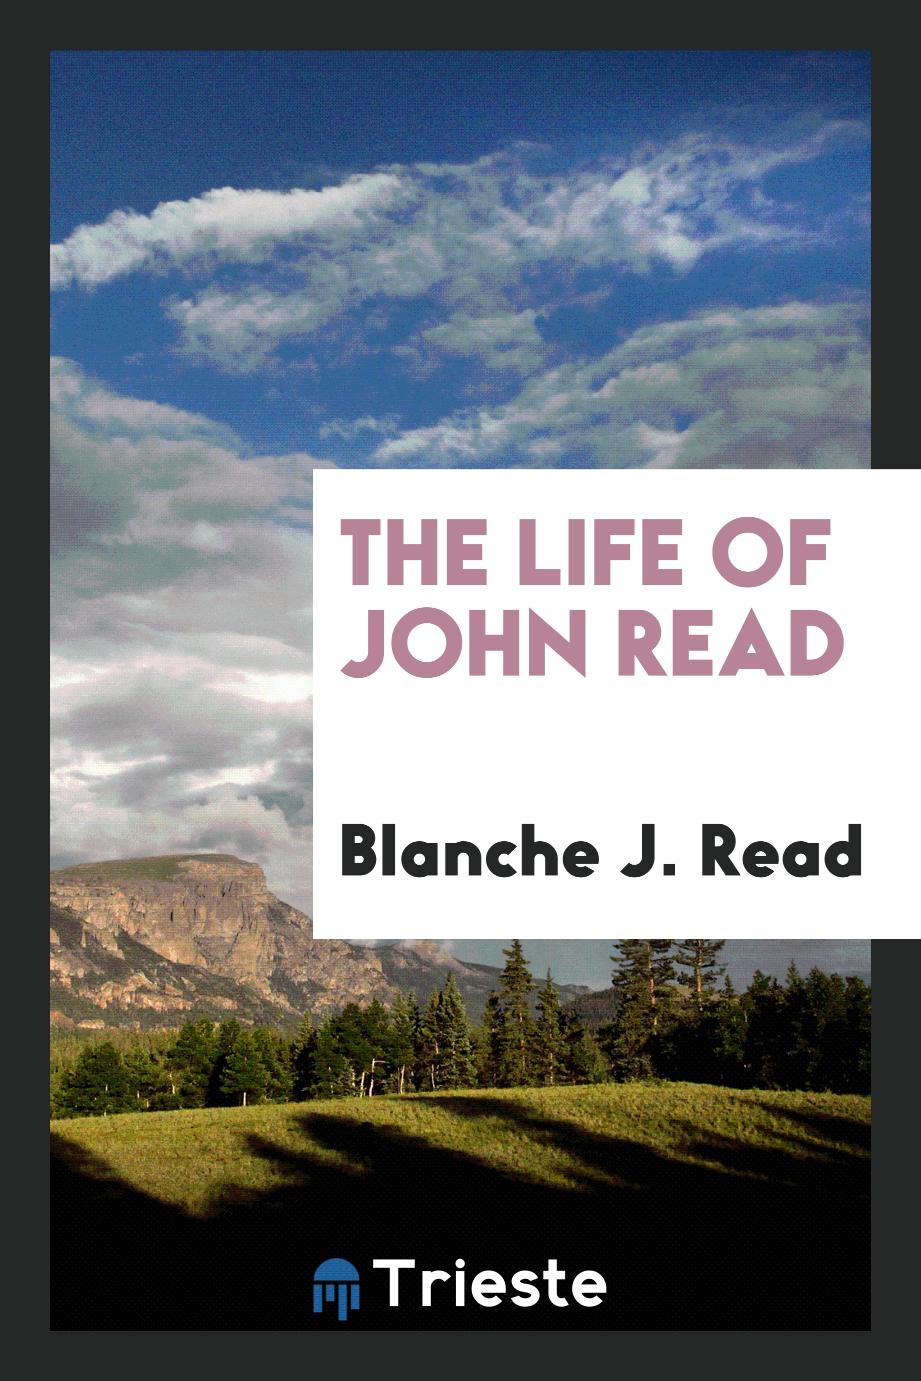 The life of John Read